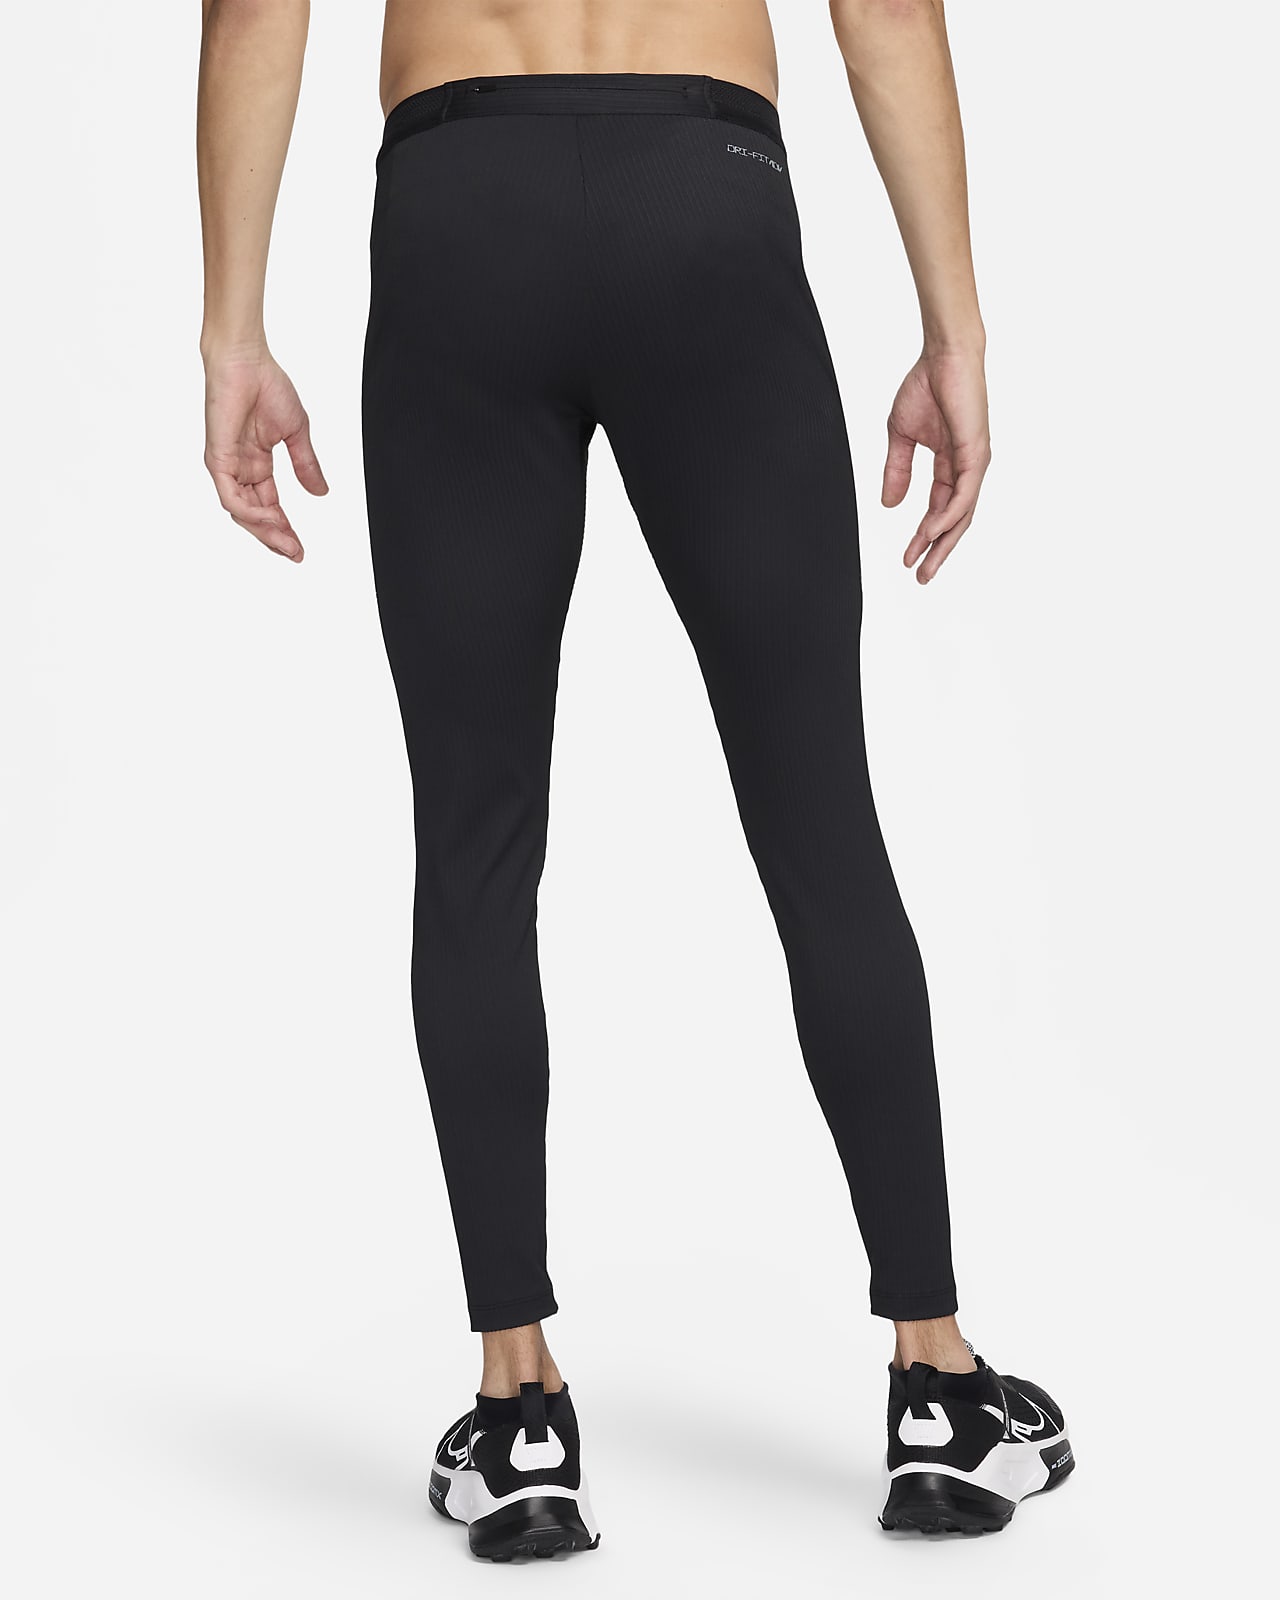 $80 NEW Mens Nike Aeroswift 1/2 Length Running Tights Shorts AR3246-474 XL  